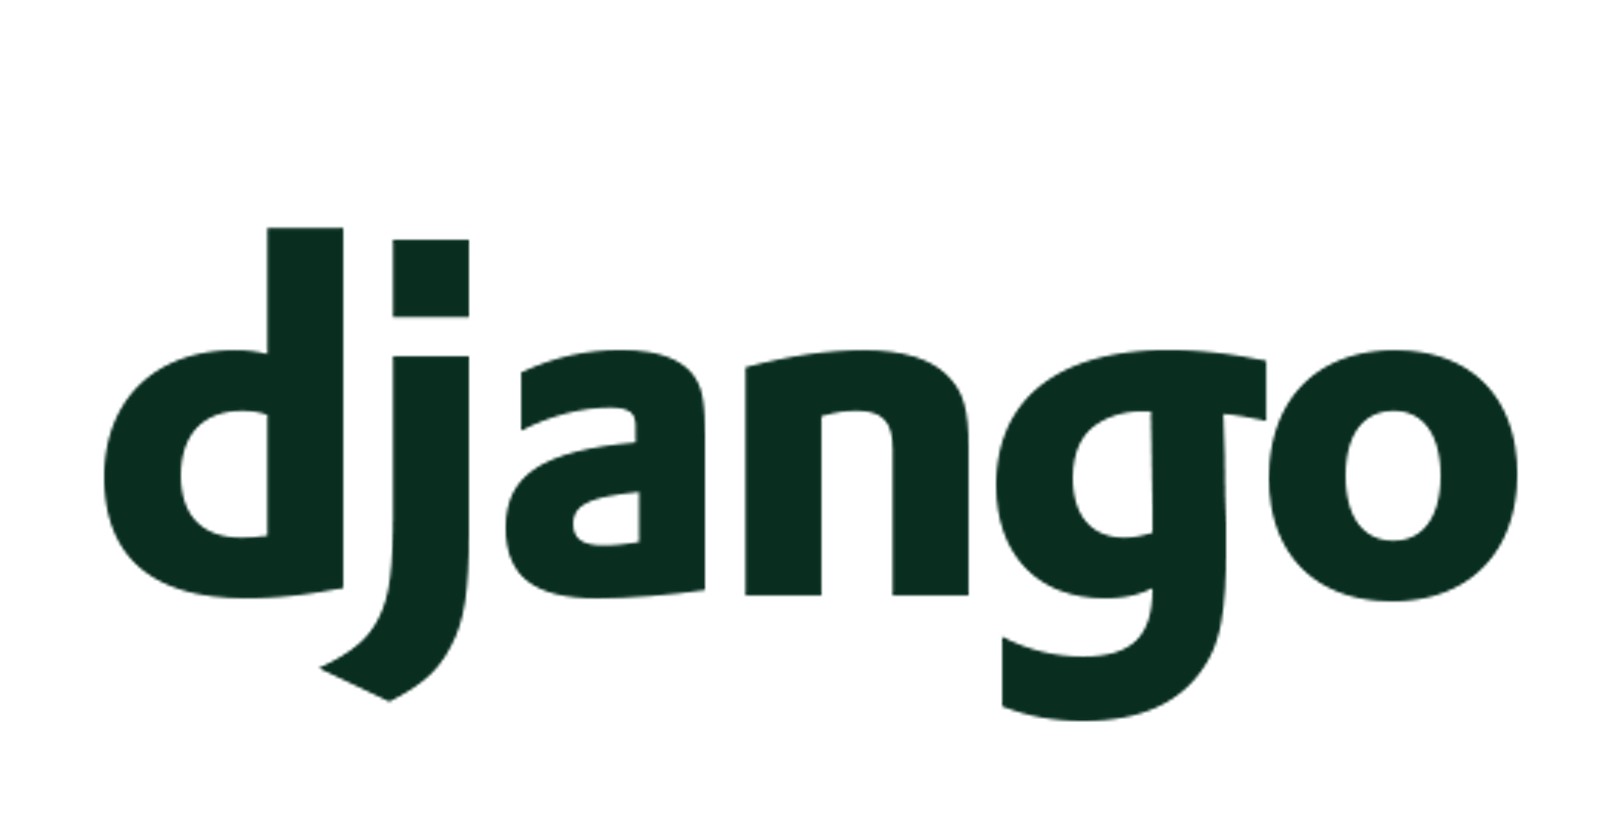 First steps with Django - Part 2